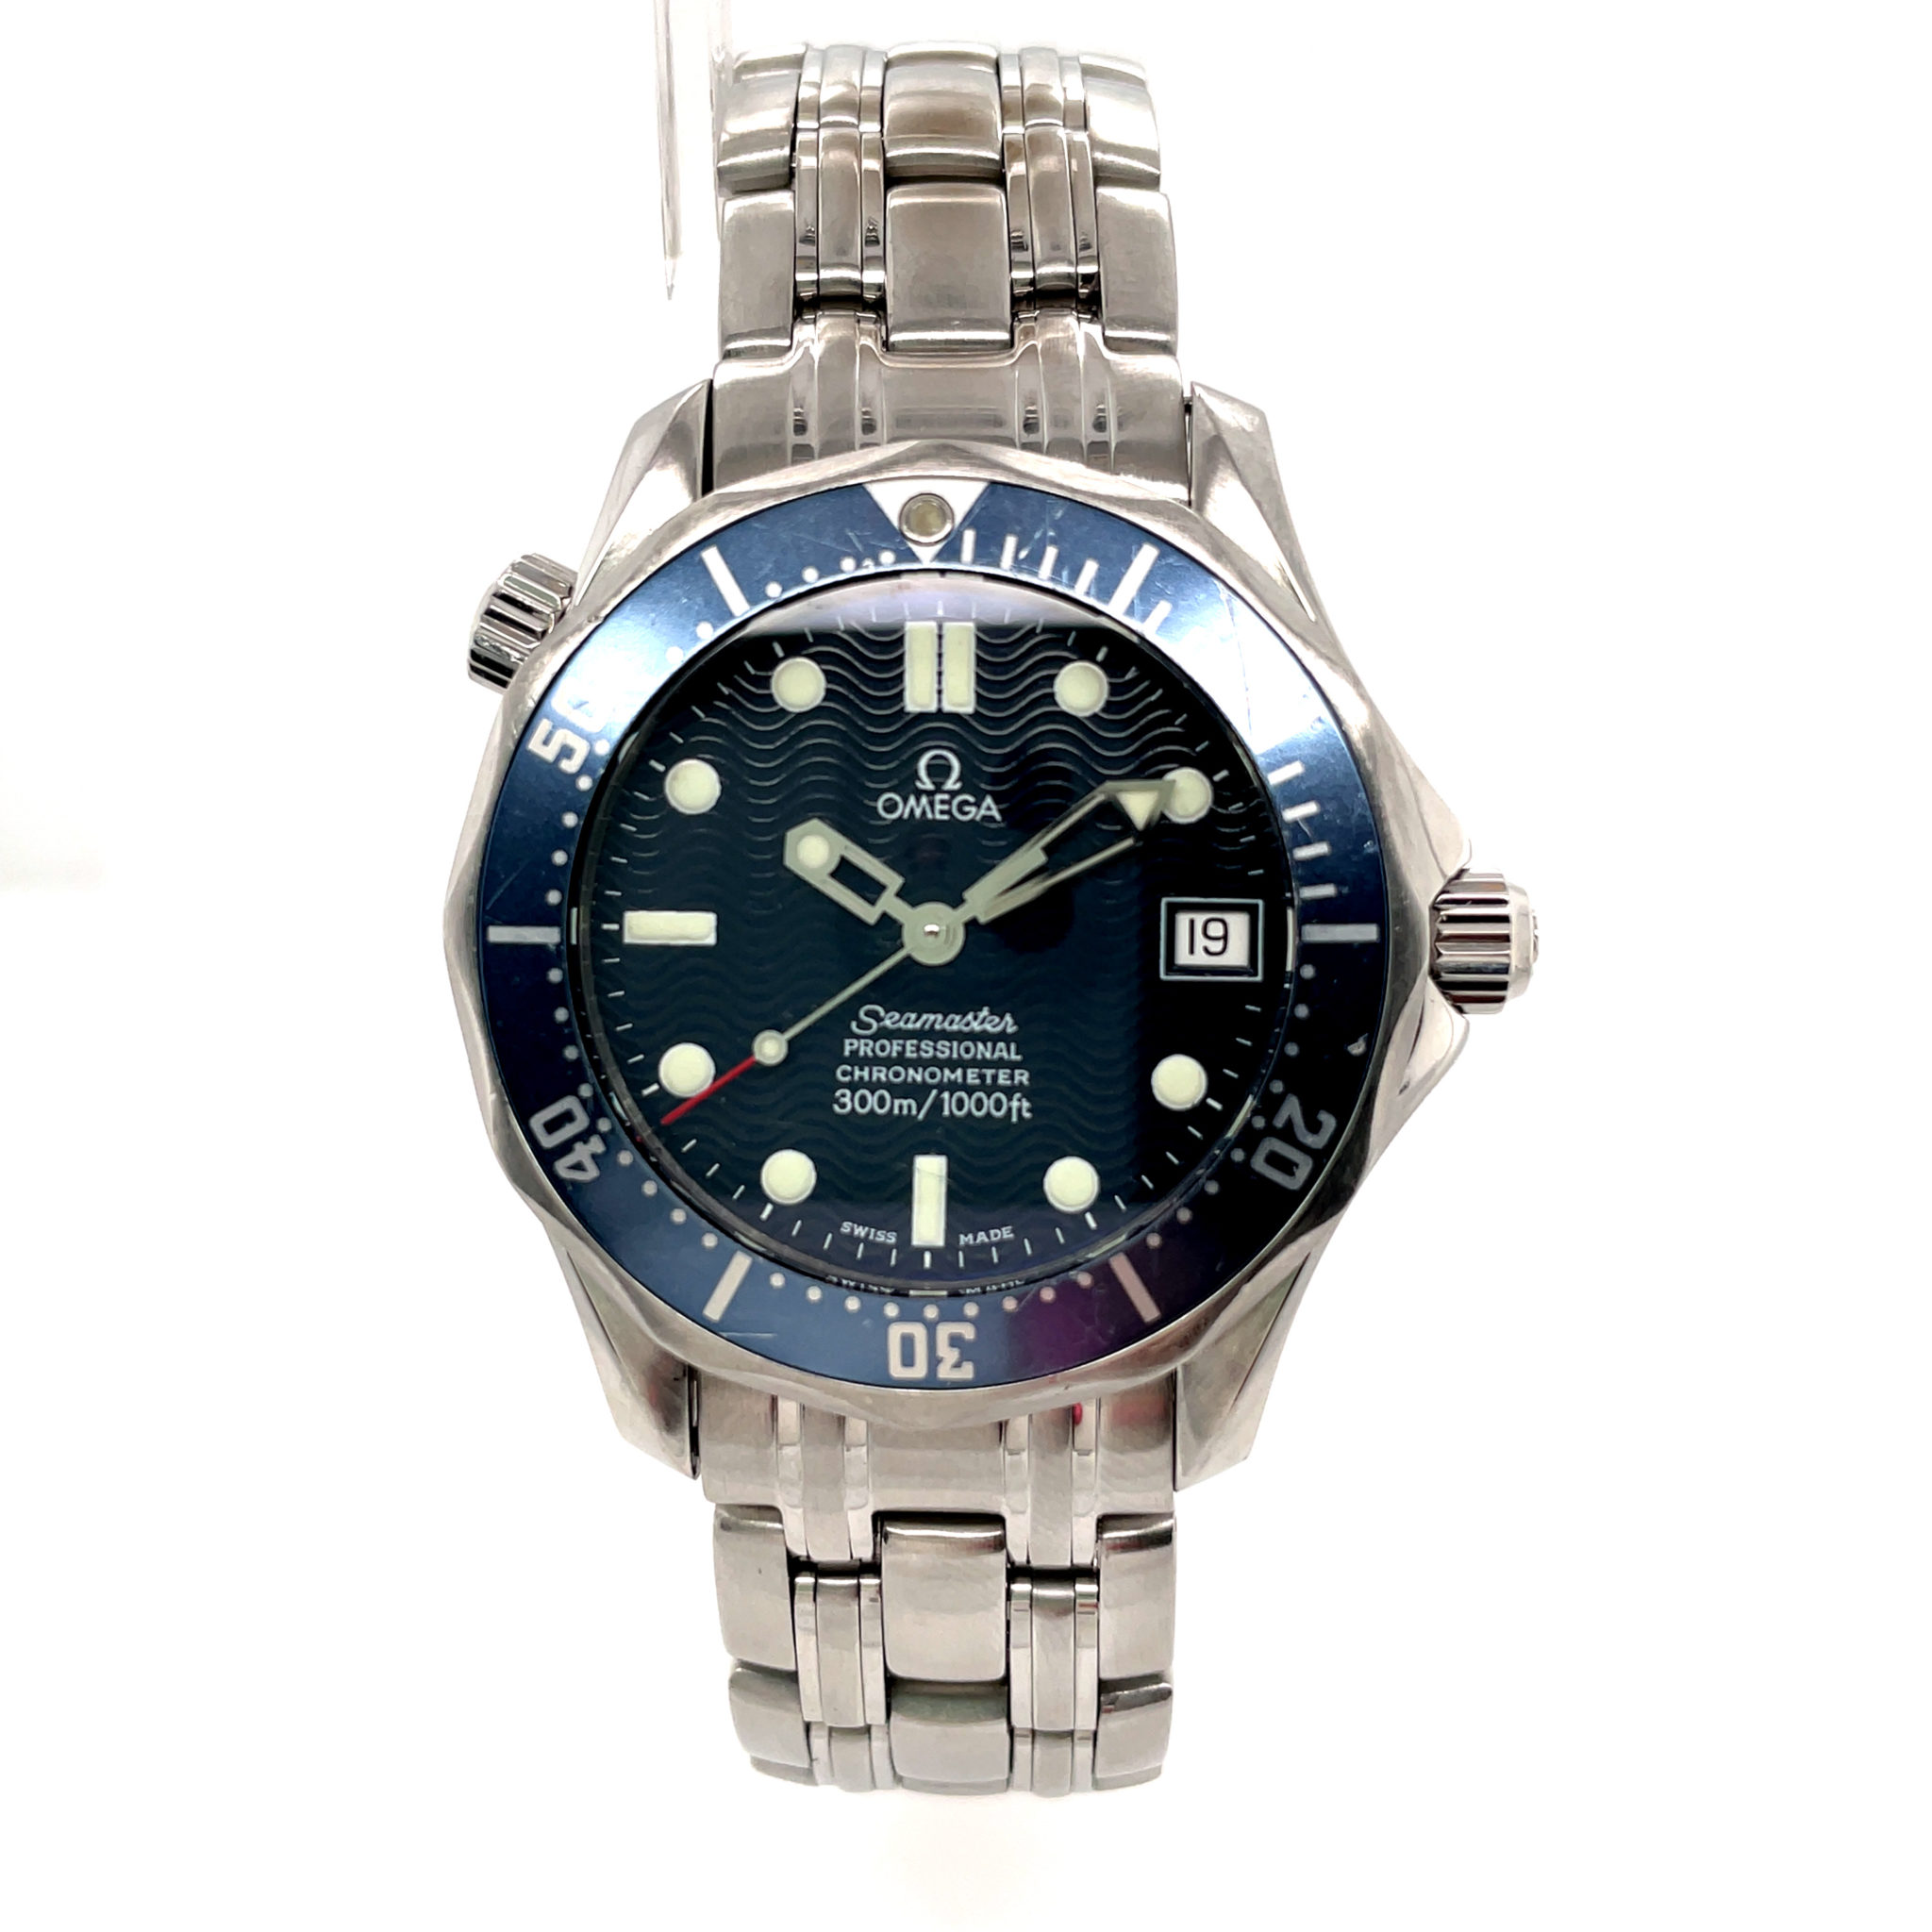 Omega Seamaster Diver Mid Size Chronometer James Bond Ref 2551.80.00 Full Set 1994